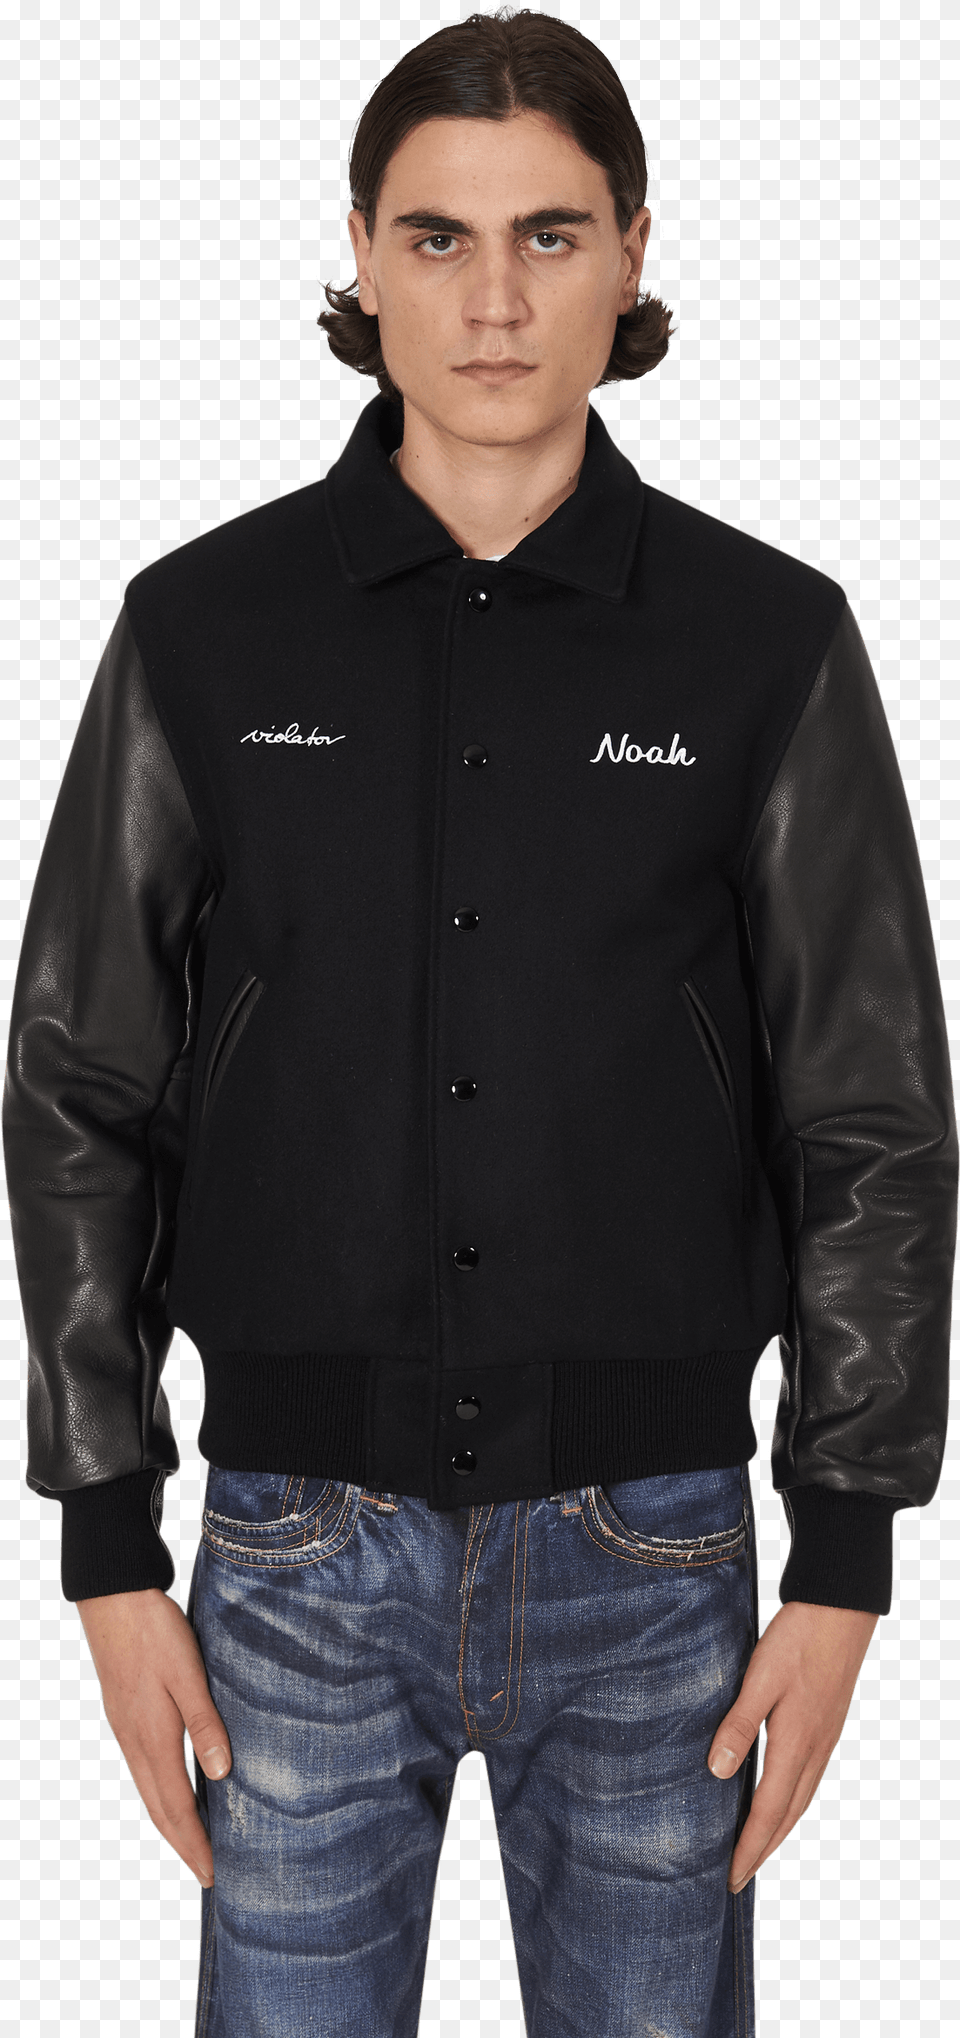 Noah Depeche Mode Violator Rose Varsity Violator Depeche Mode Sweater, Jacket, Clothing, Coat, Man Png